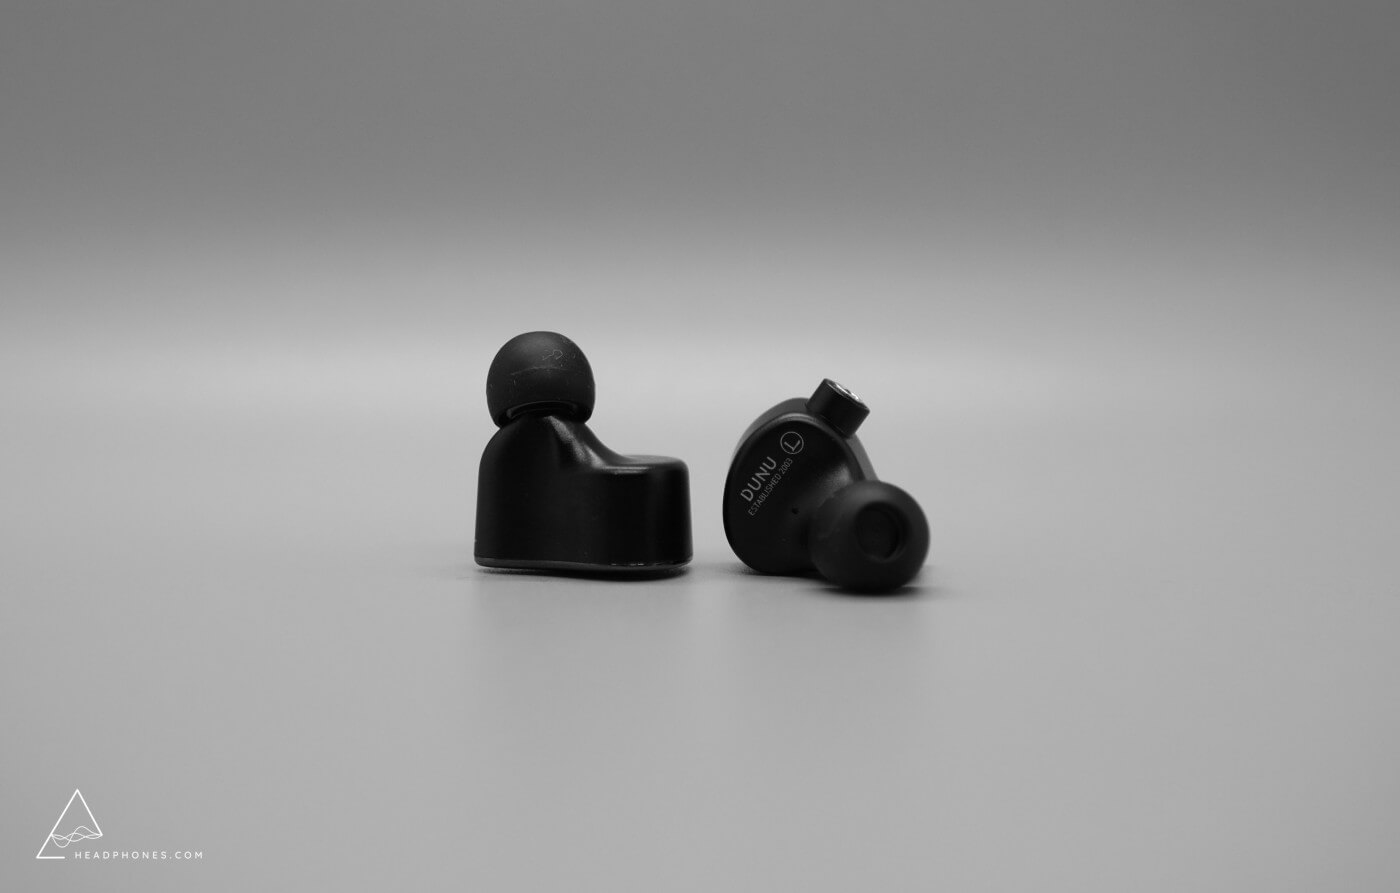 Dunu Vulkan Review | Headphones.com